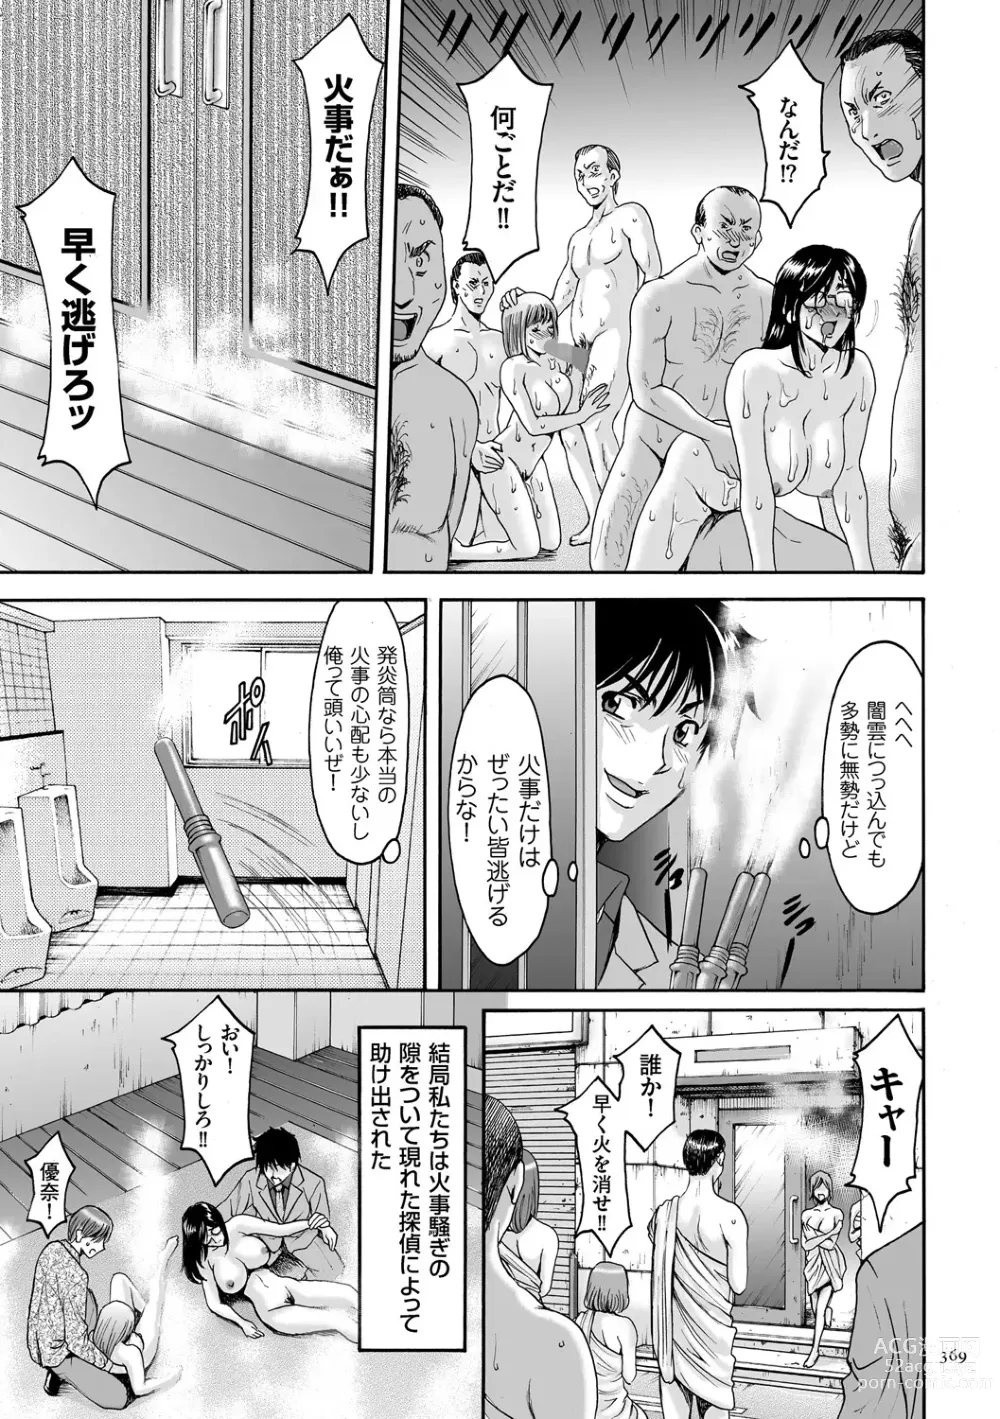 Page 369 of manga Sennyu Tsuma Satomi Kiroku